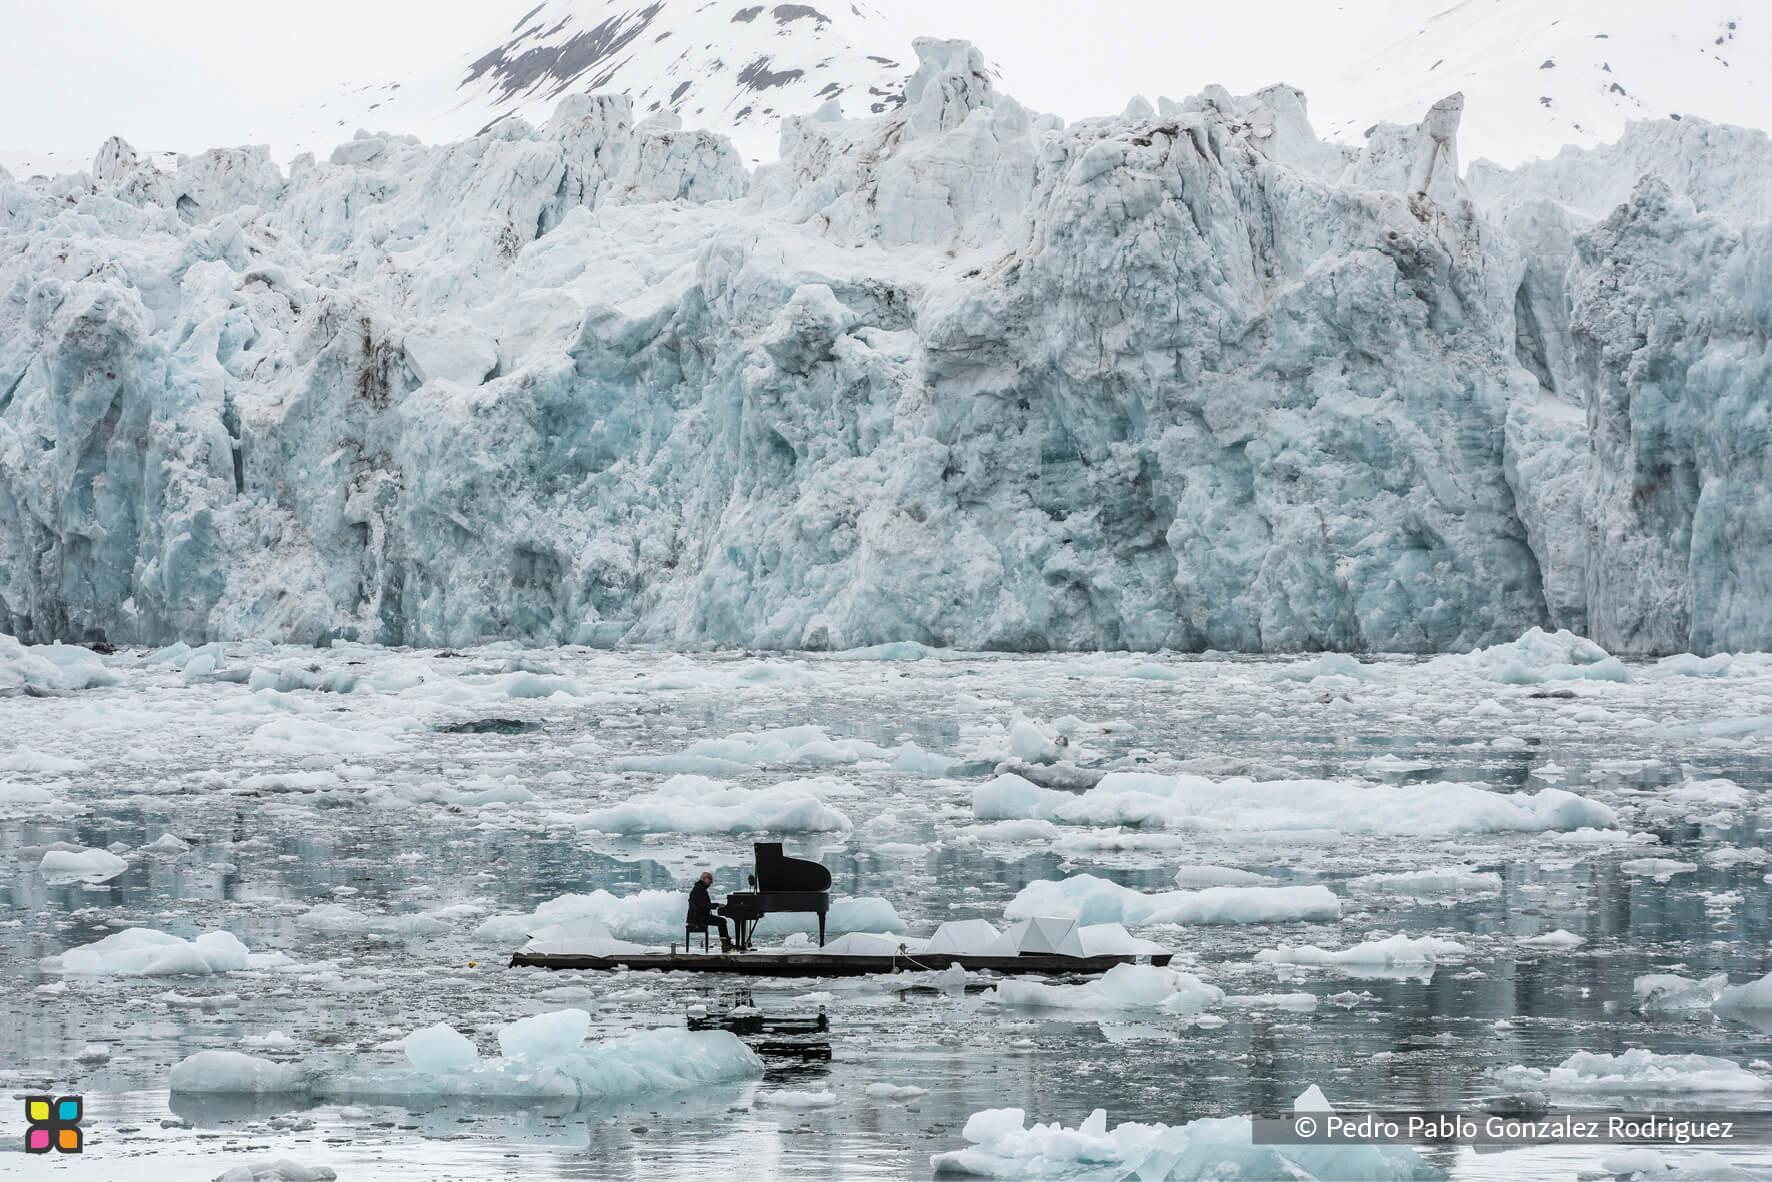 Ludovico Einaudi playing for change. 
Photographer: Pedro Pablo Gonzalez Rodriguez  Location: Arctic Ocean